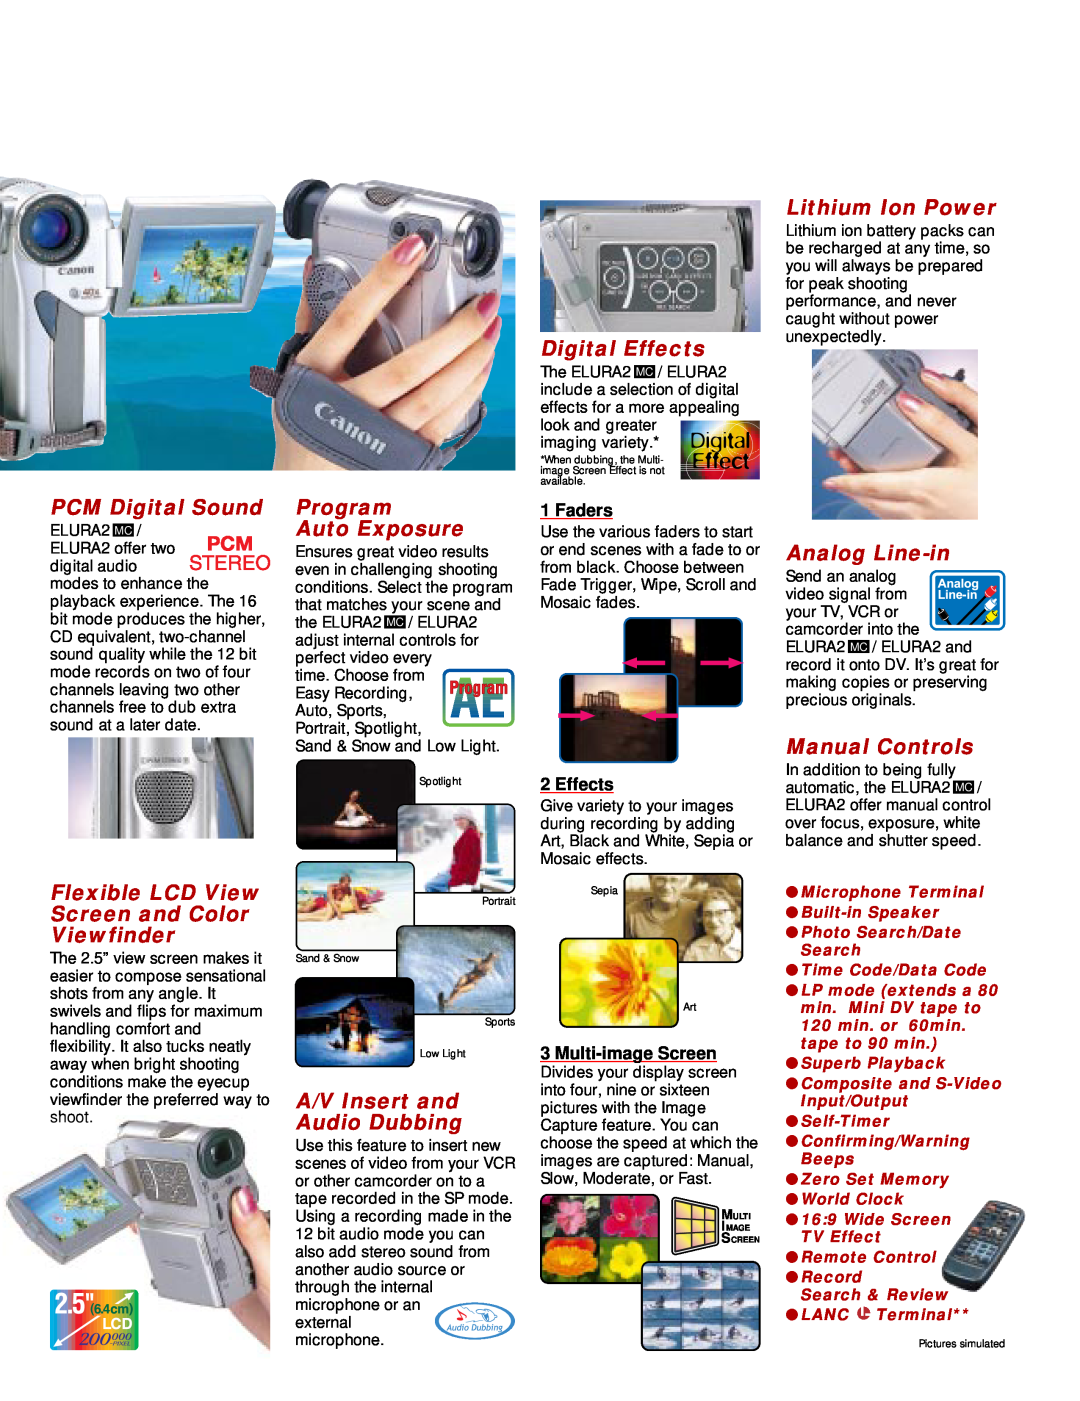 Canon 2MC PCM Digital Sound, Program Auto Exposure, Digital Effects, Lithium Ion Power, Analog Line-in, Manual Controls 